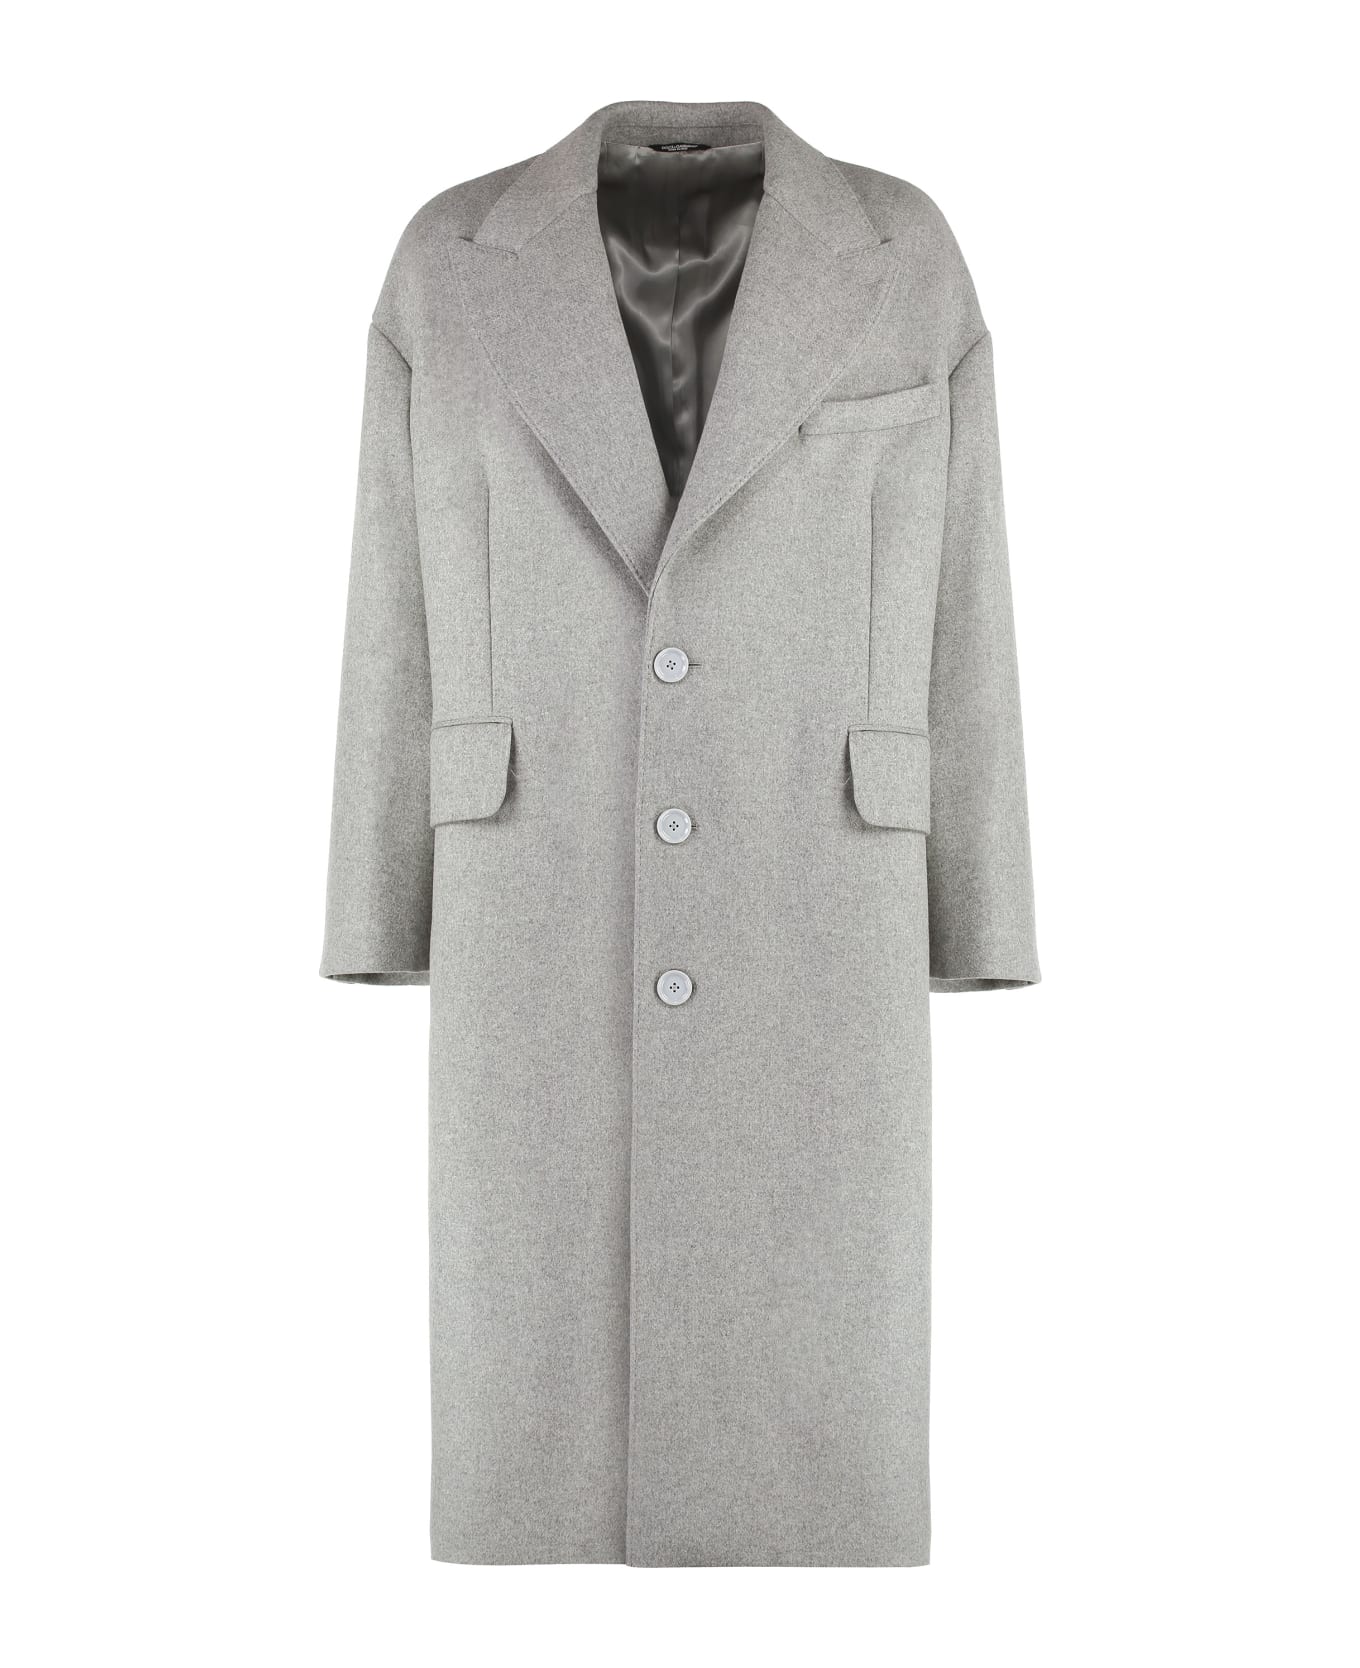 Dolce & Gabbana Wool Blend Coat - grey